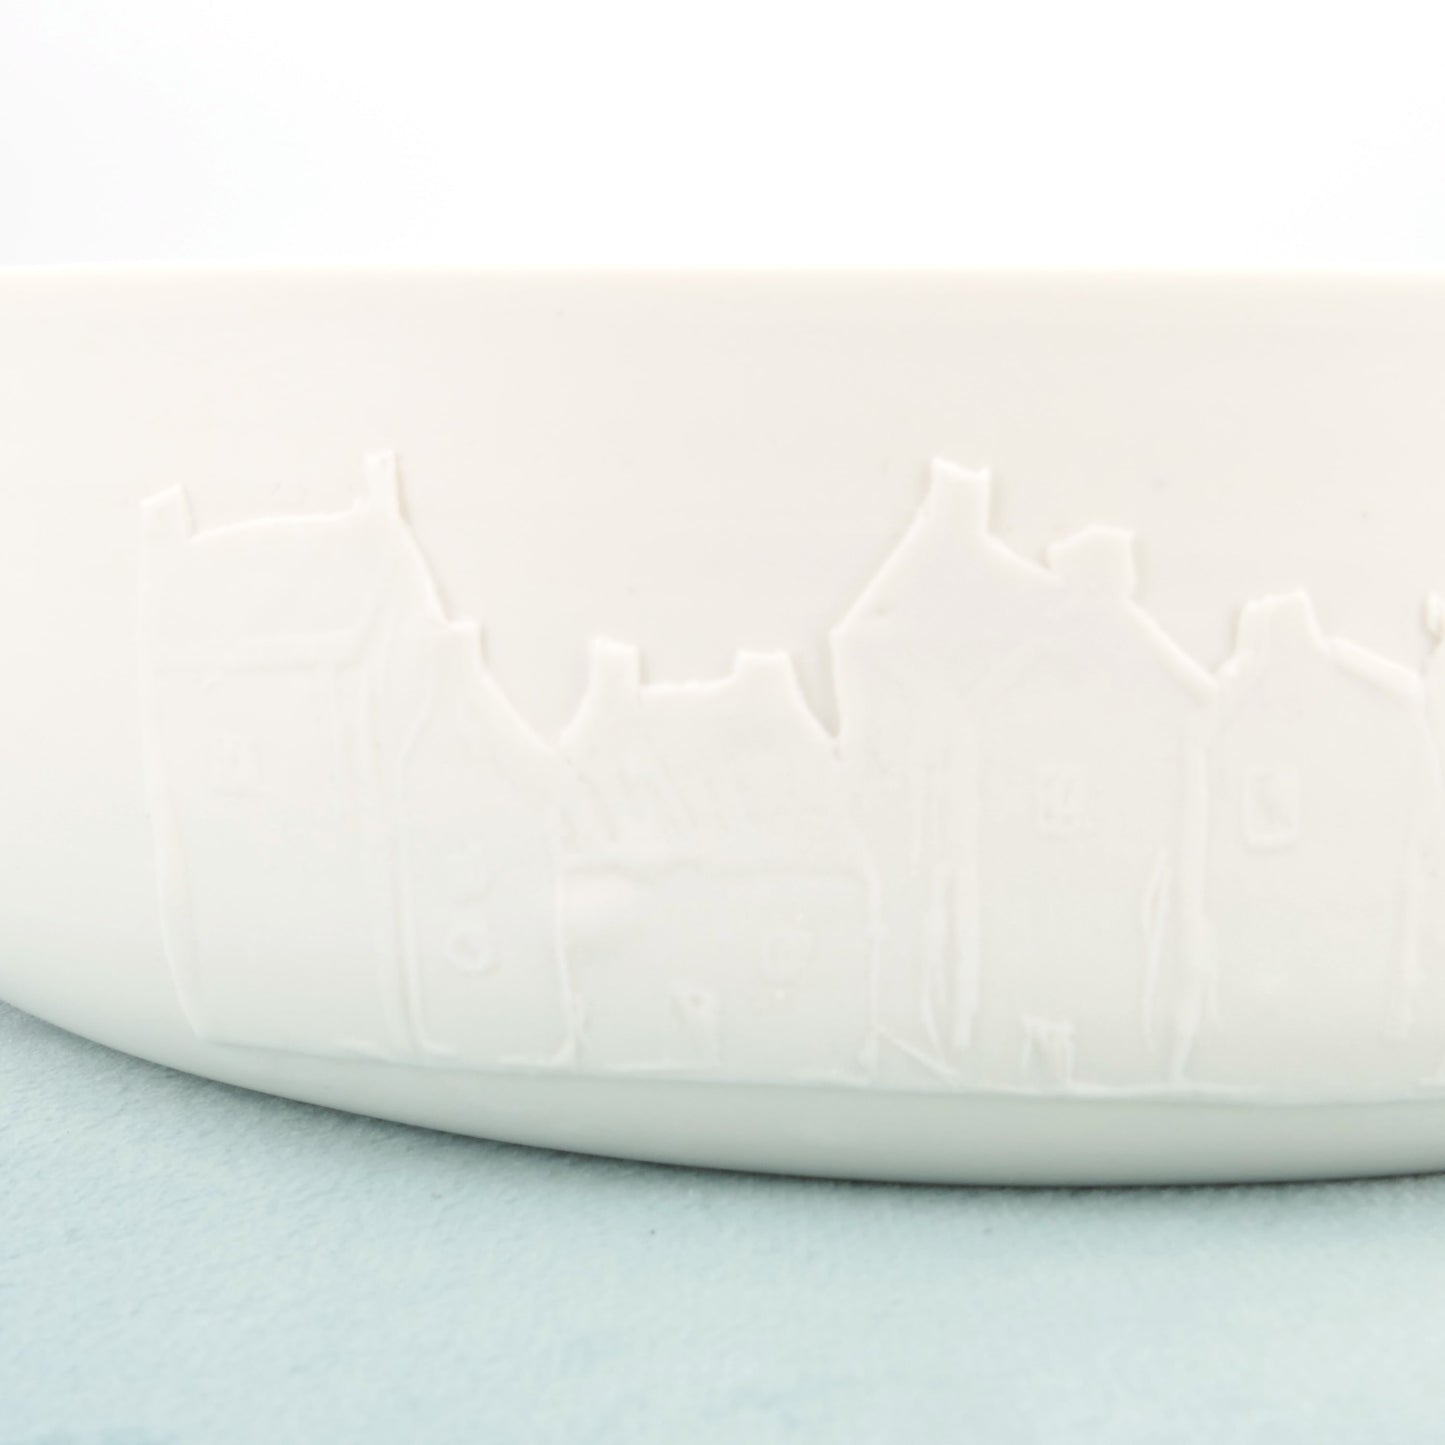 Porcelain bowl - French Address